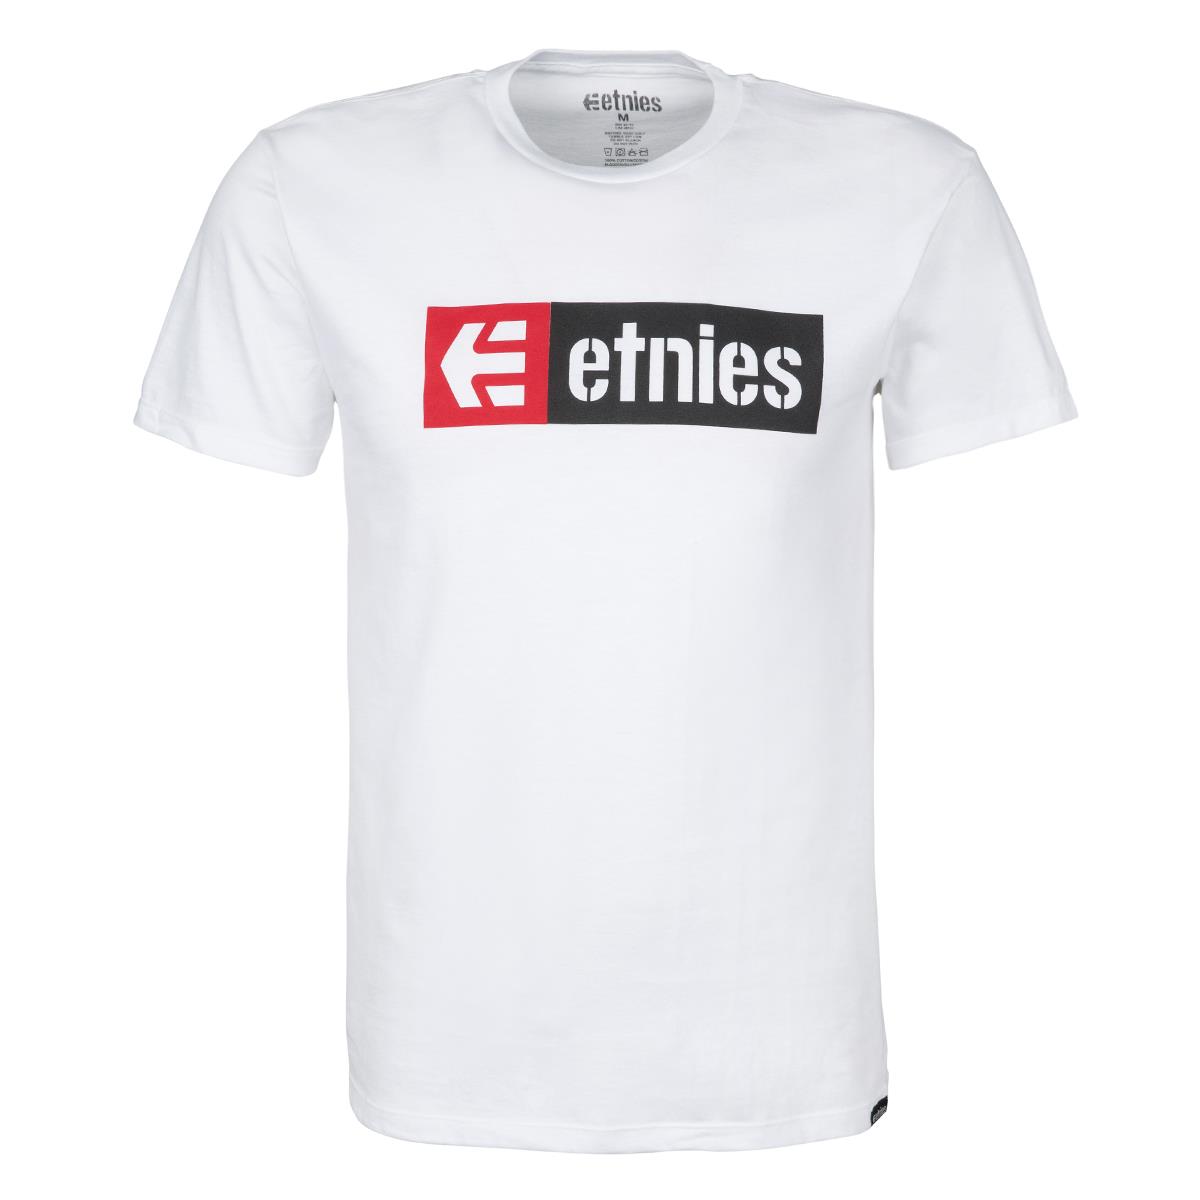 Etnies T-Shirt New Box White/Pink